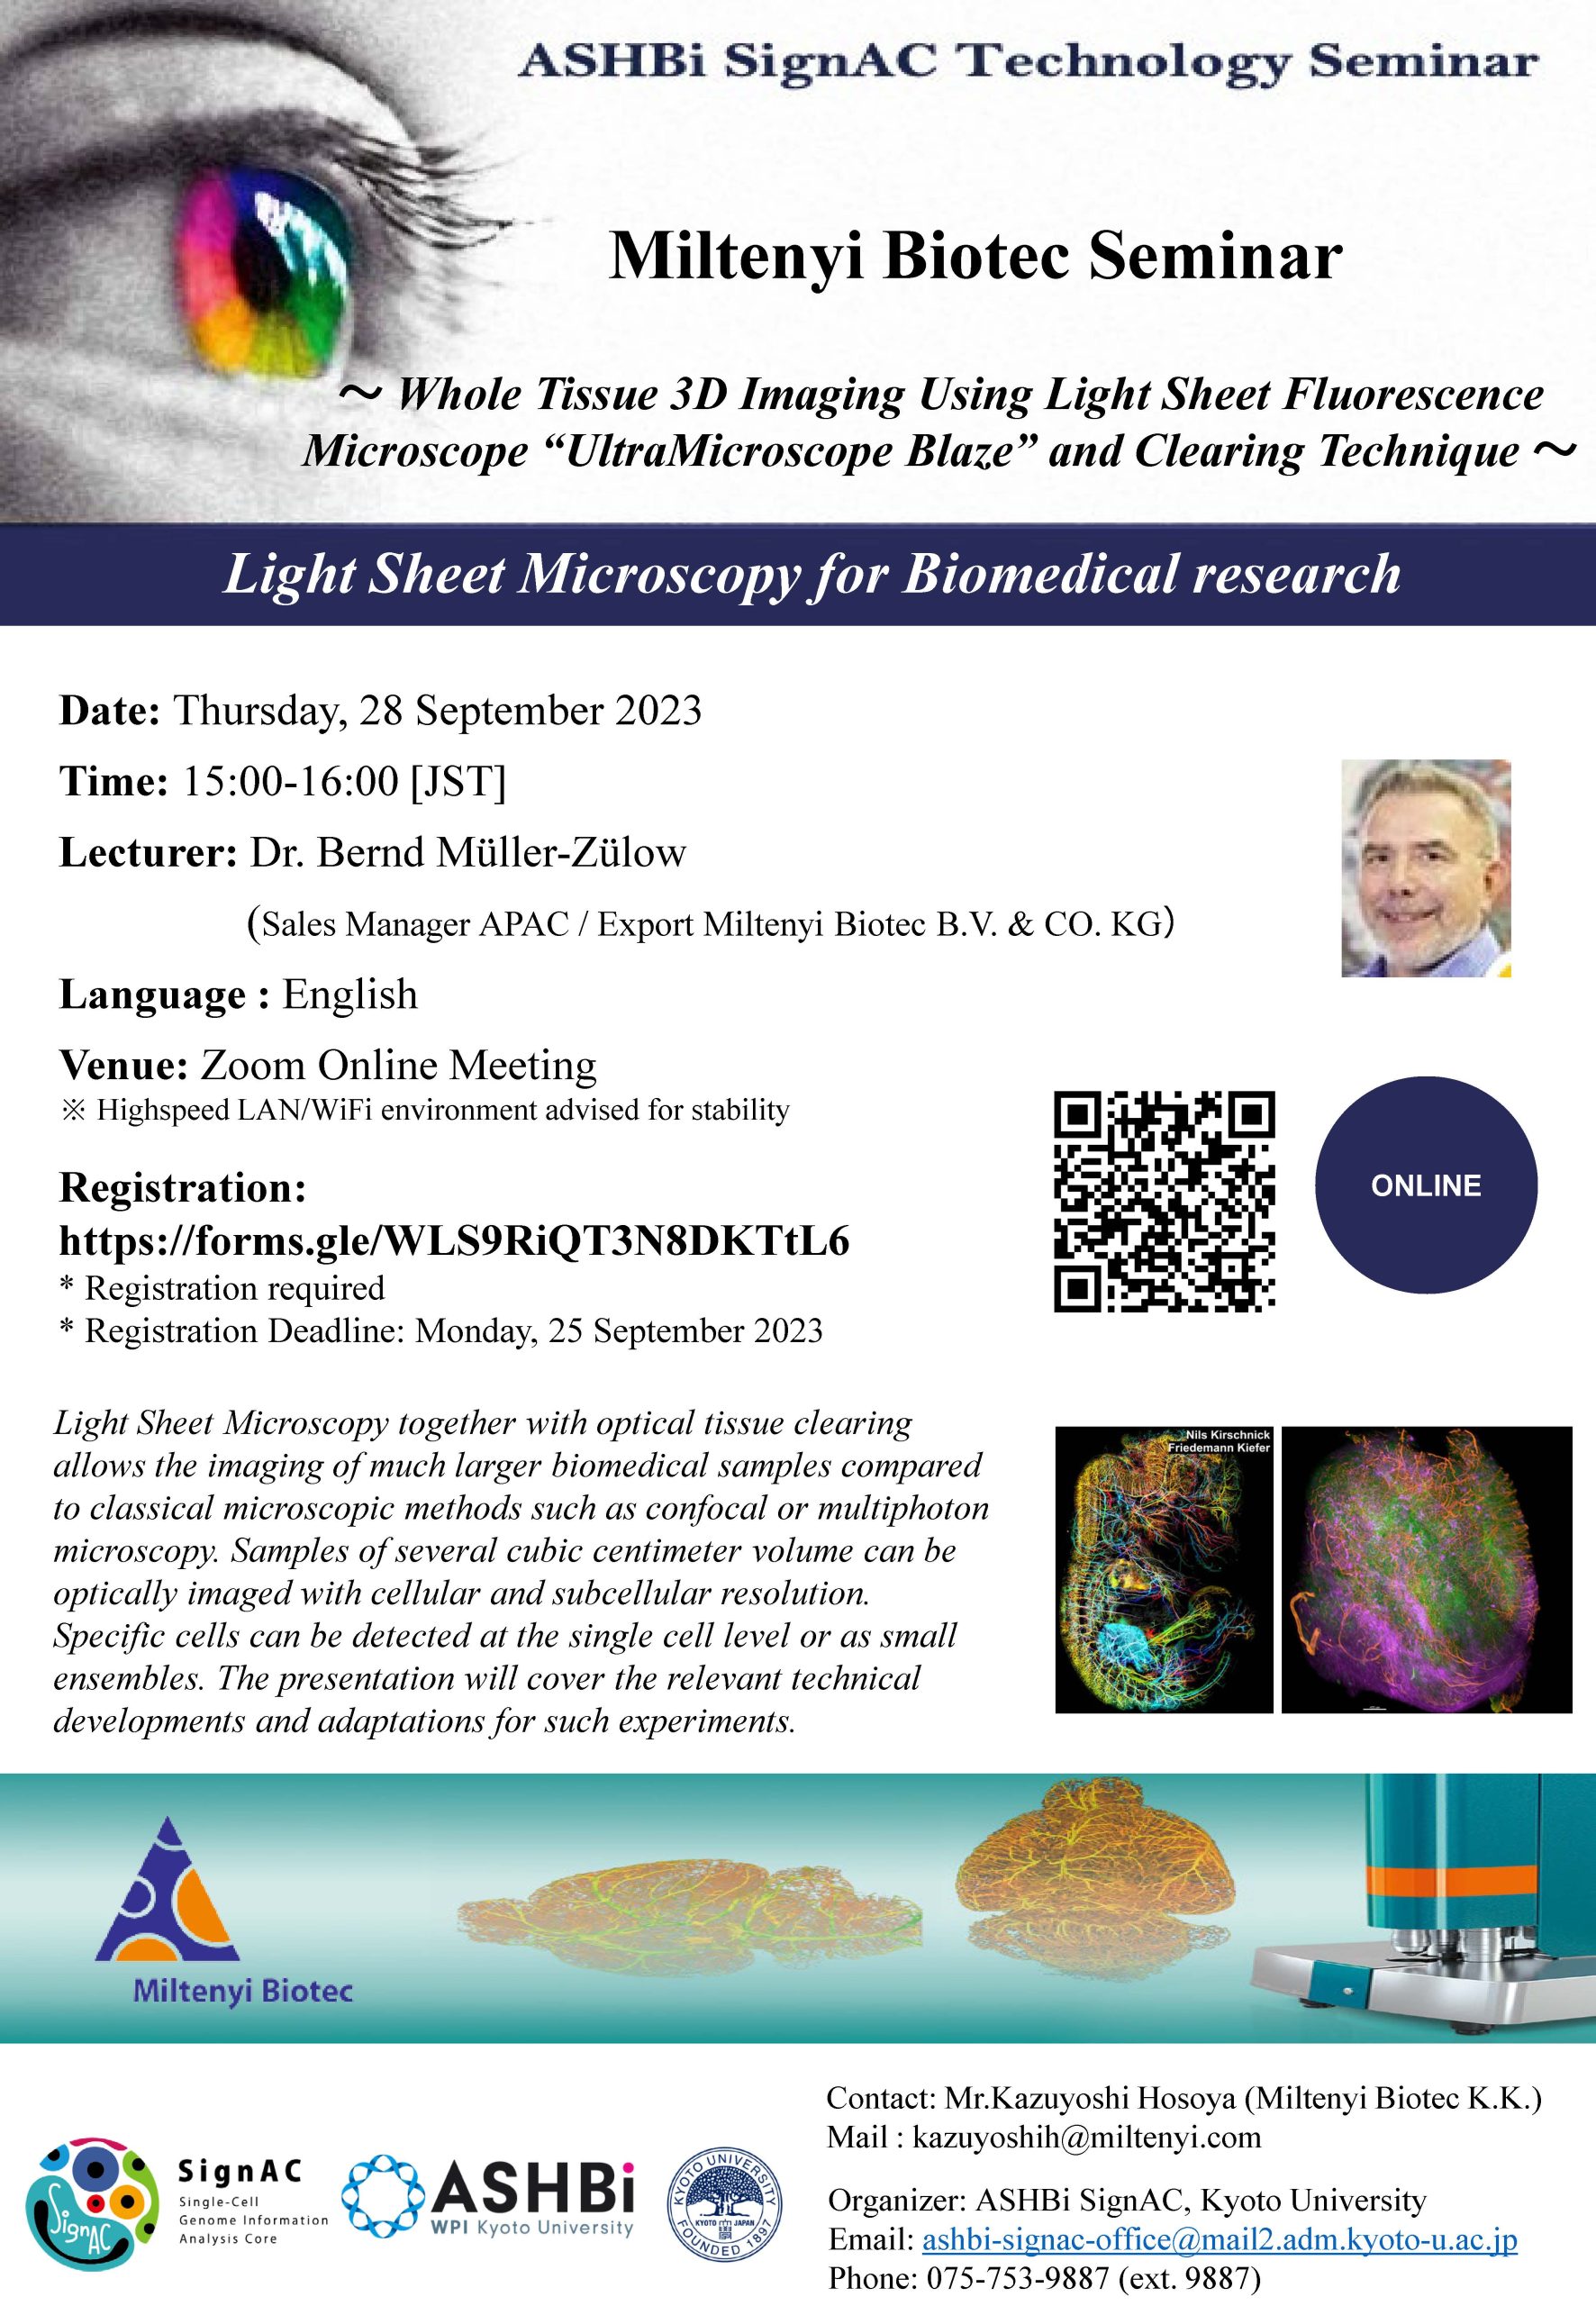 ASHBi SignAC Technology Seminar – Miltenyi Biotec